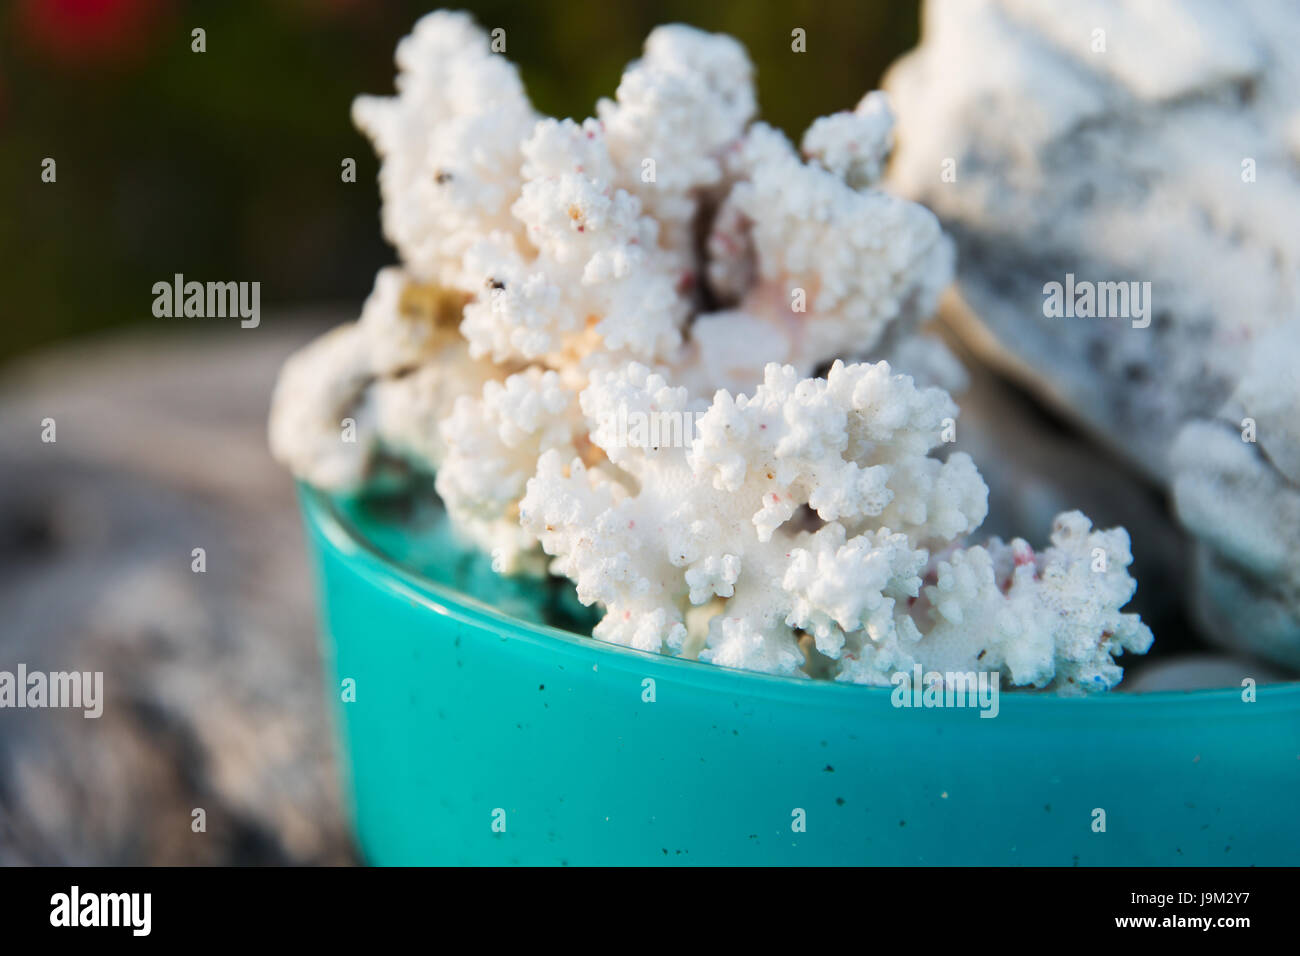 hard stony coral in bowl Stock Photo